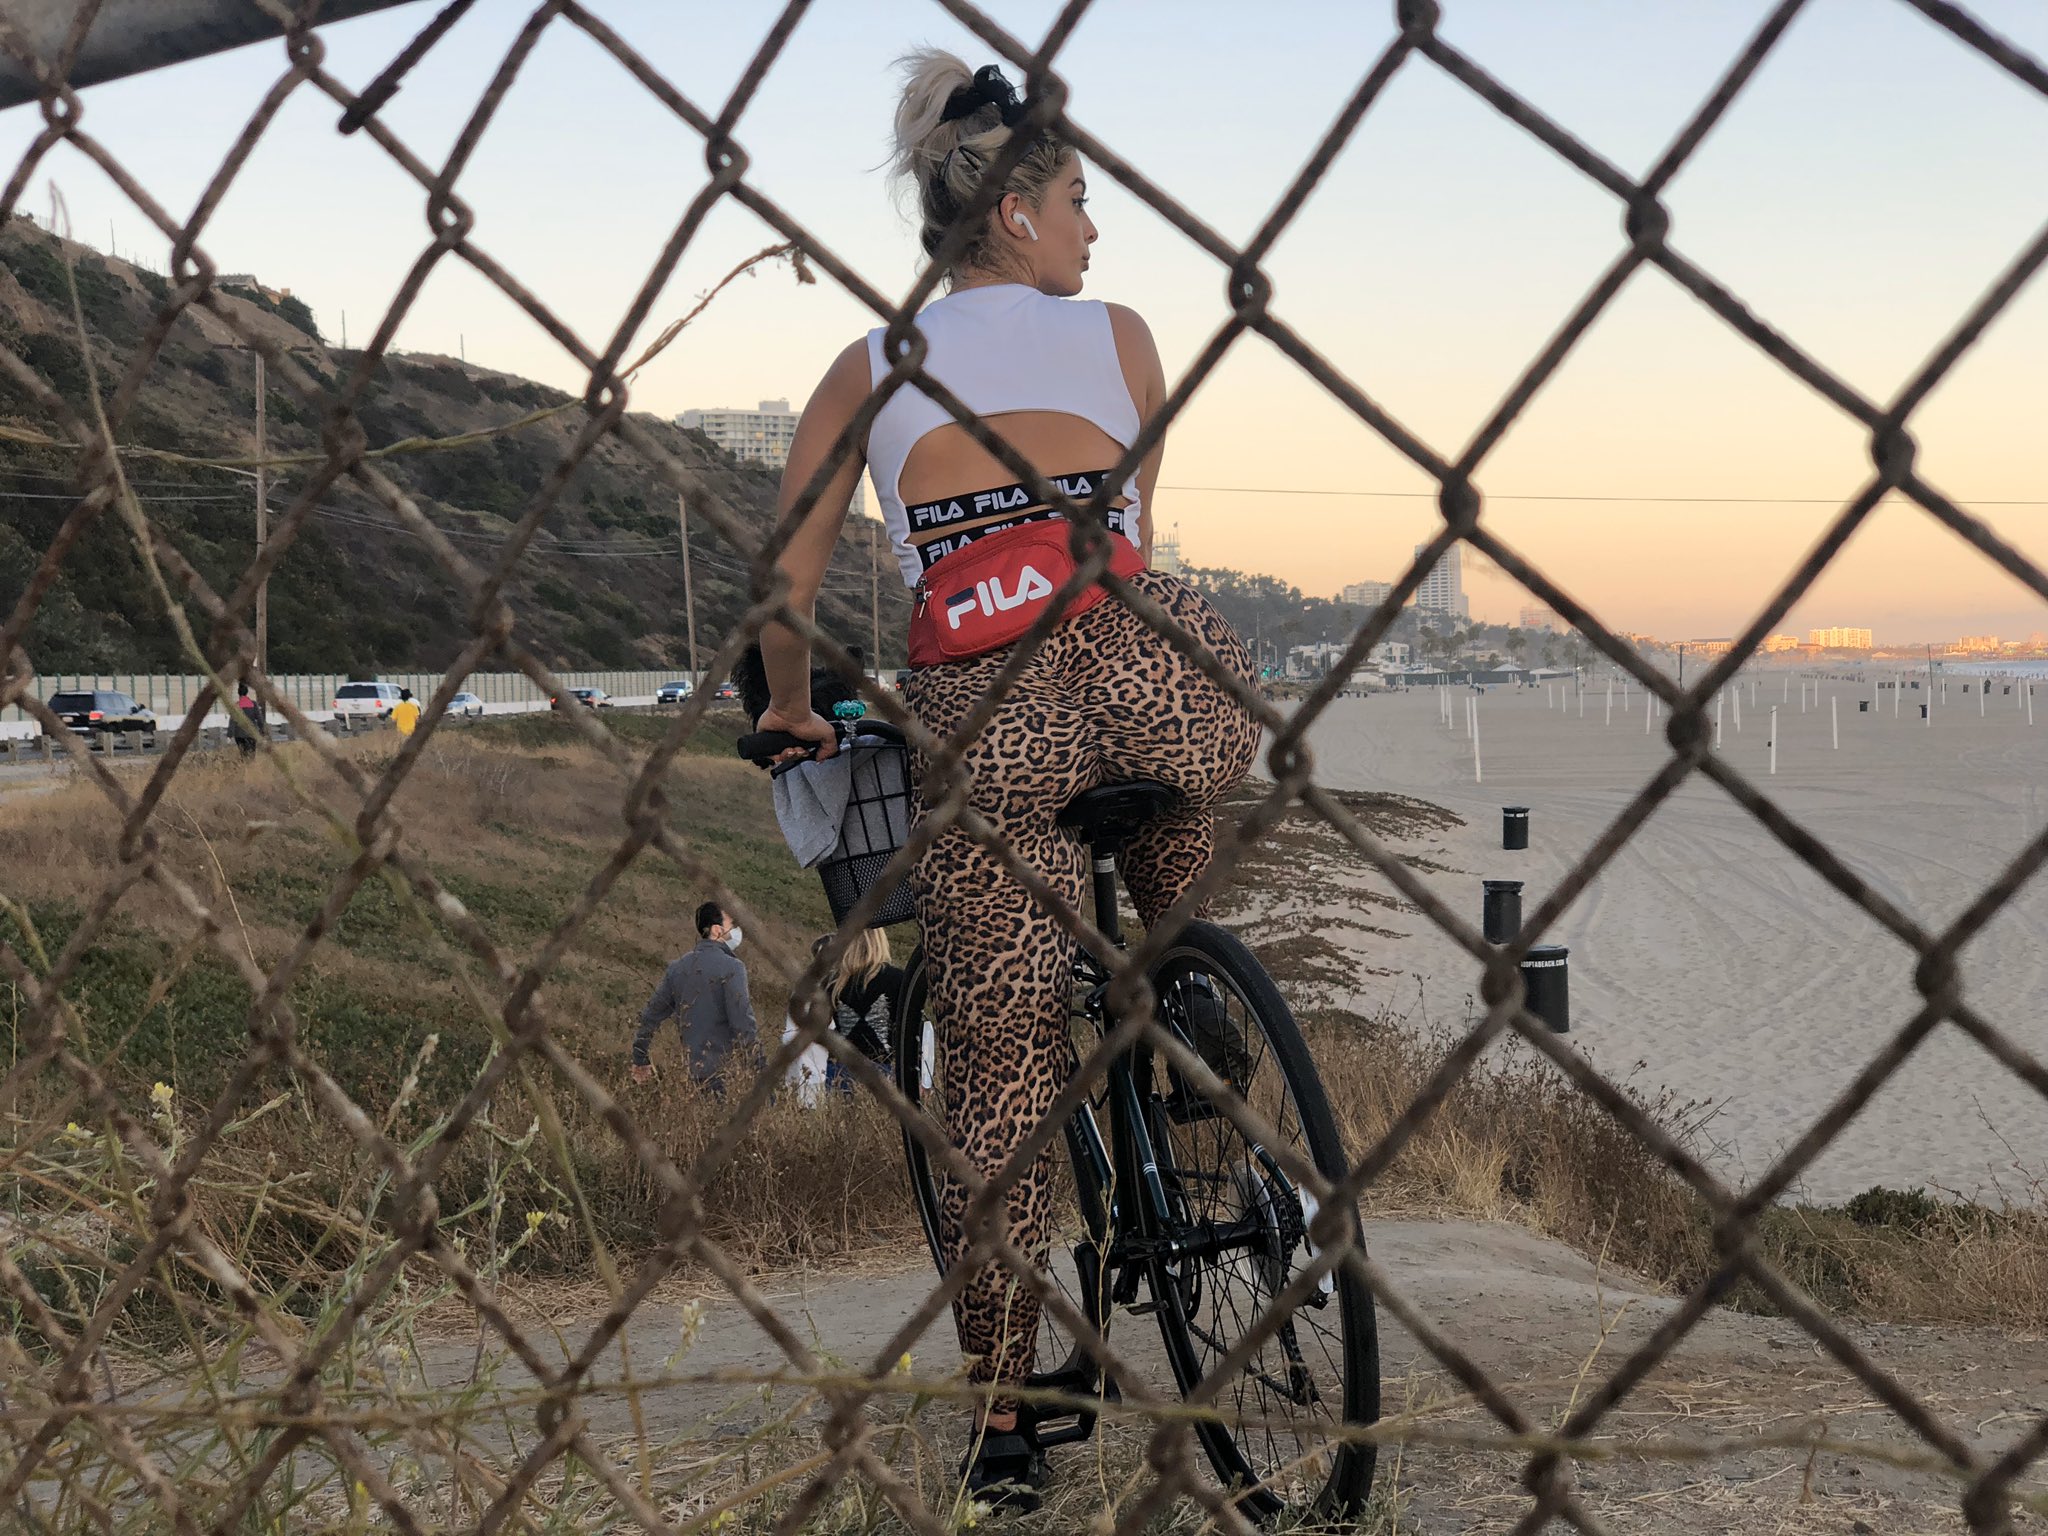 Fotos n°2 : Bebe Rexha Monta en bicicleta!